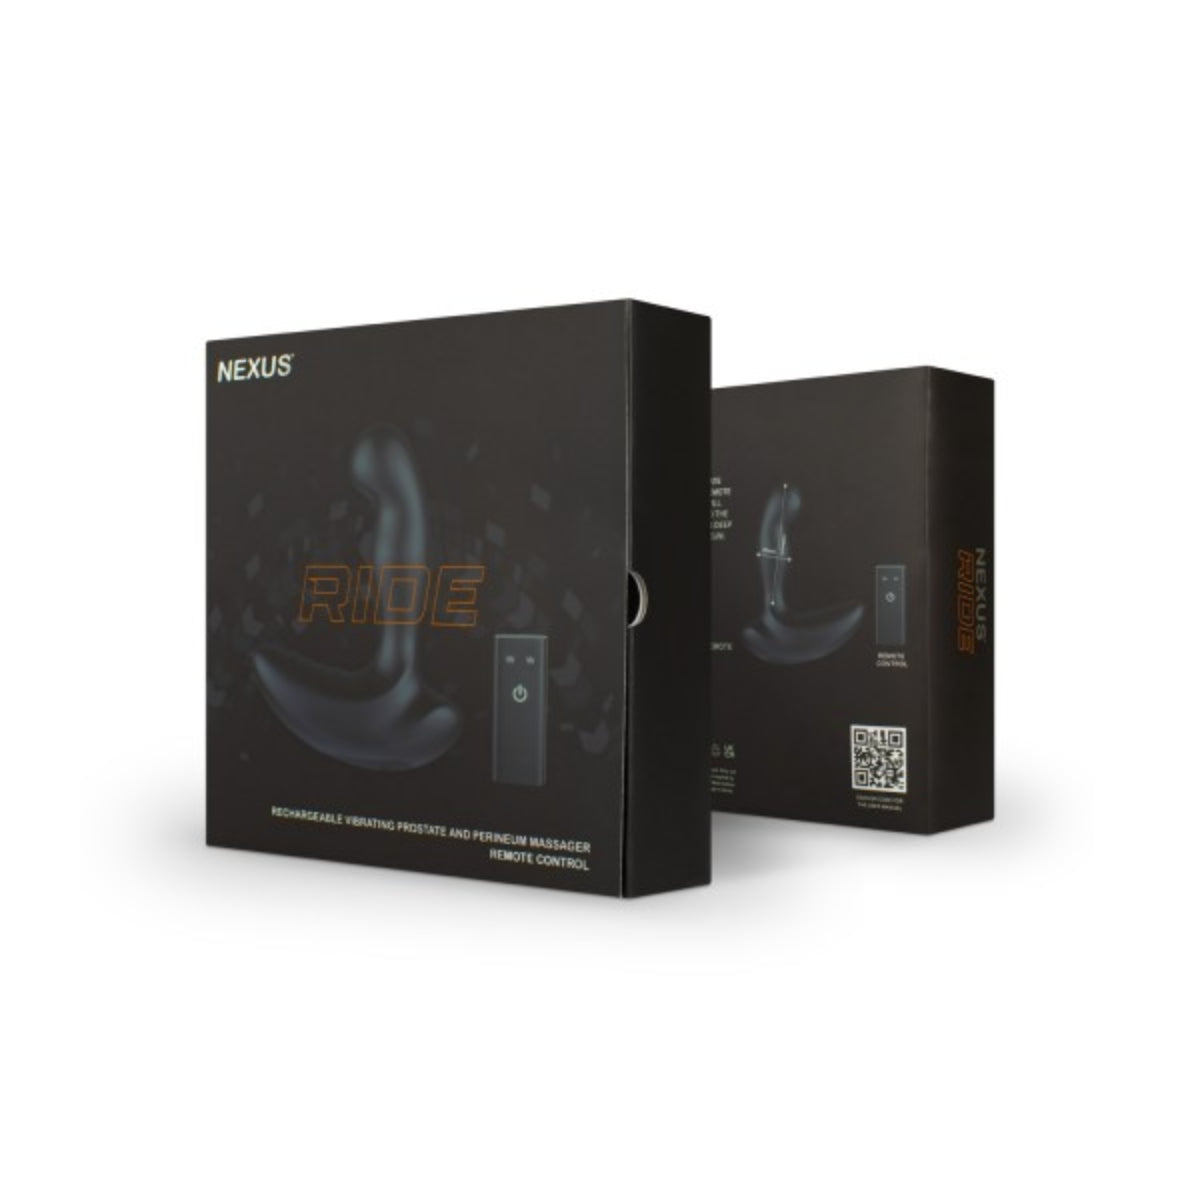 Nexus Ride Remote Control Dual Motor Prostate Massager Butt Plug (8239693103343)